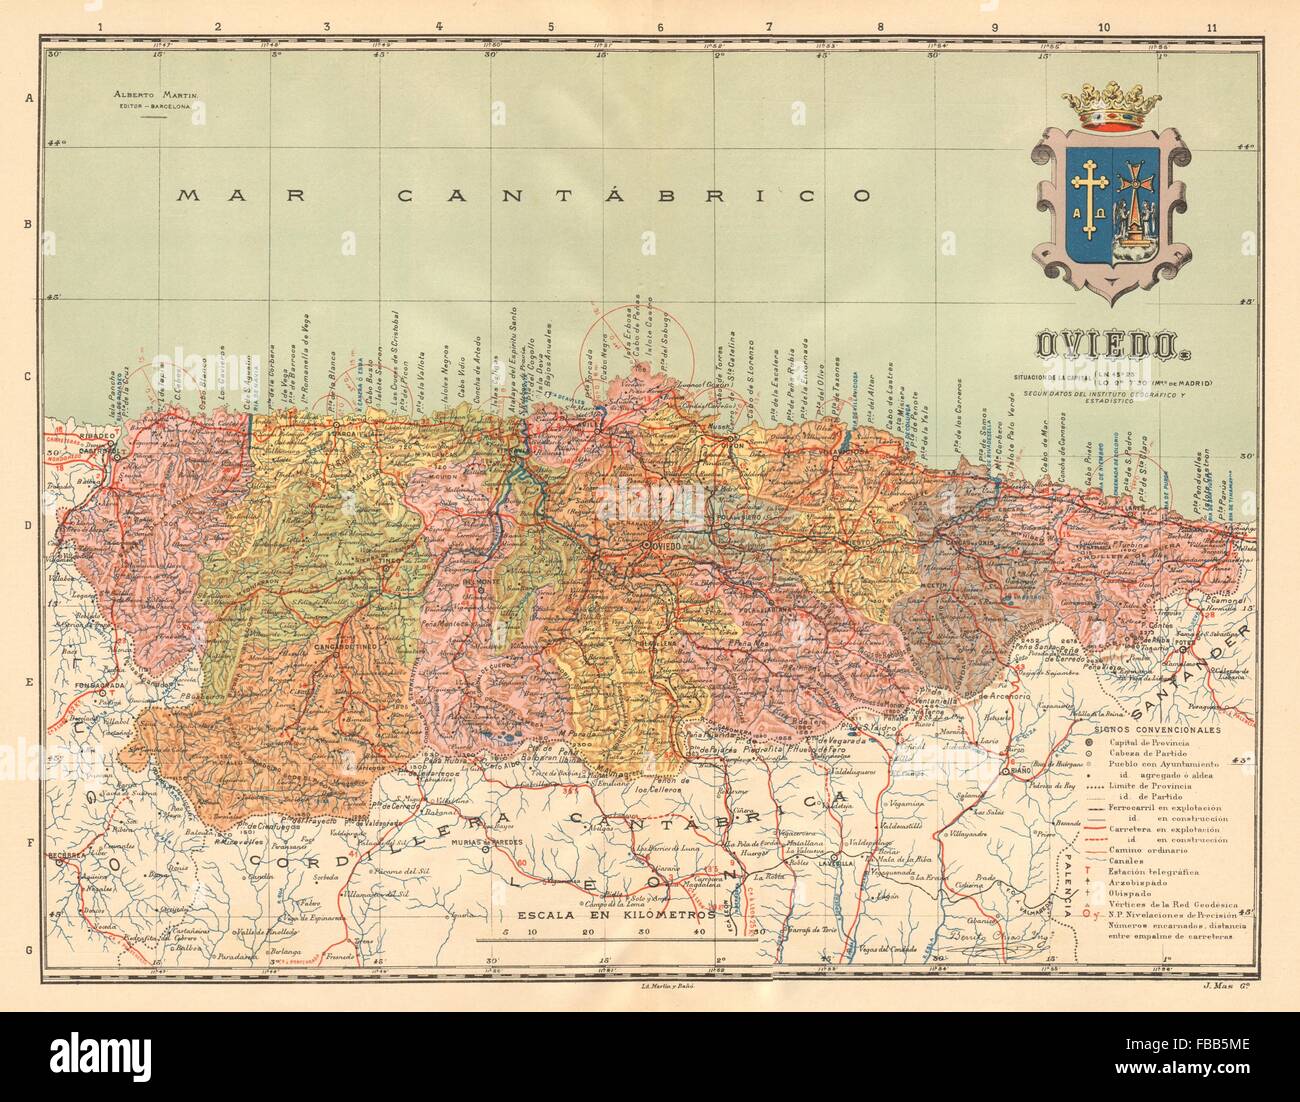 ASTURIAS. Oviedo. Mapa antiguo de la provincia. ALBERTO MARTIN, c1911 Stock Photo